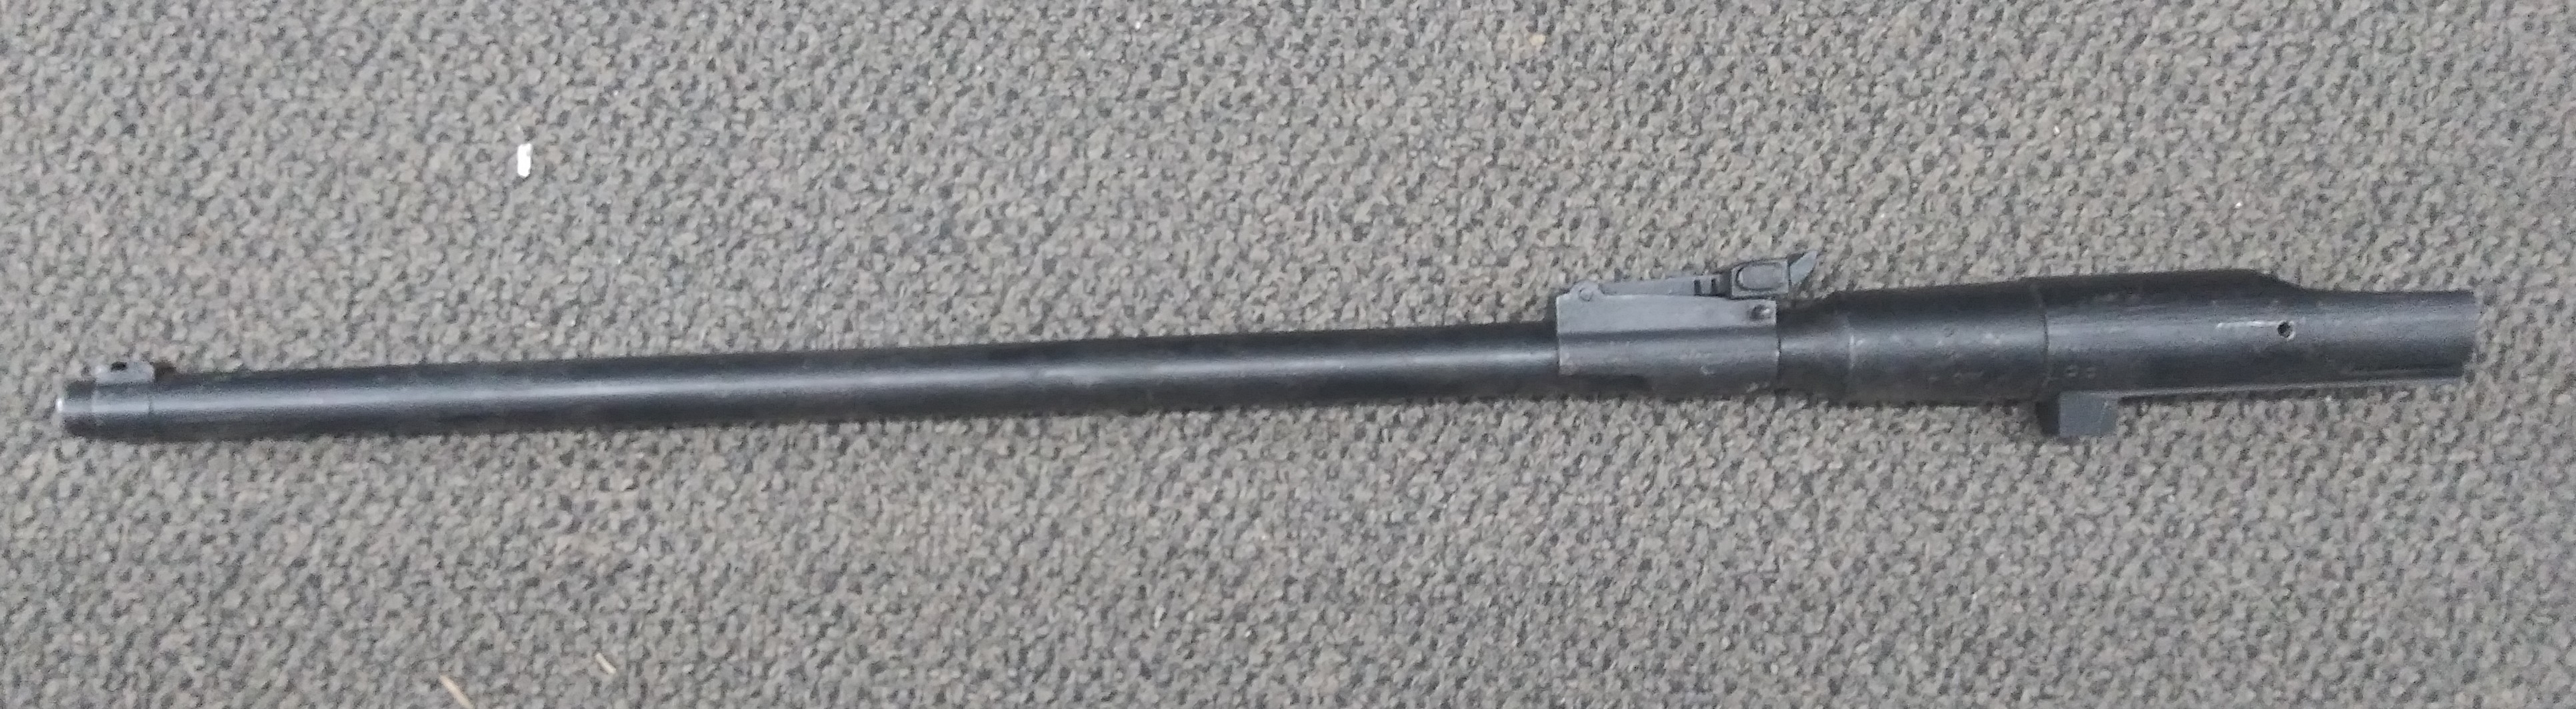 1943 IZHVESK M1938 GOOD BORE - Barrel Mosin Nagant Rifle